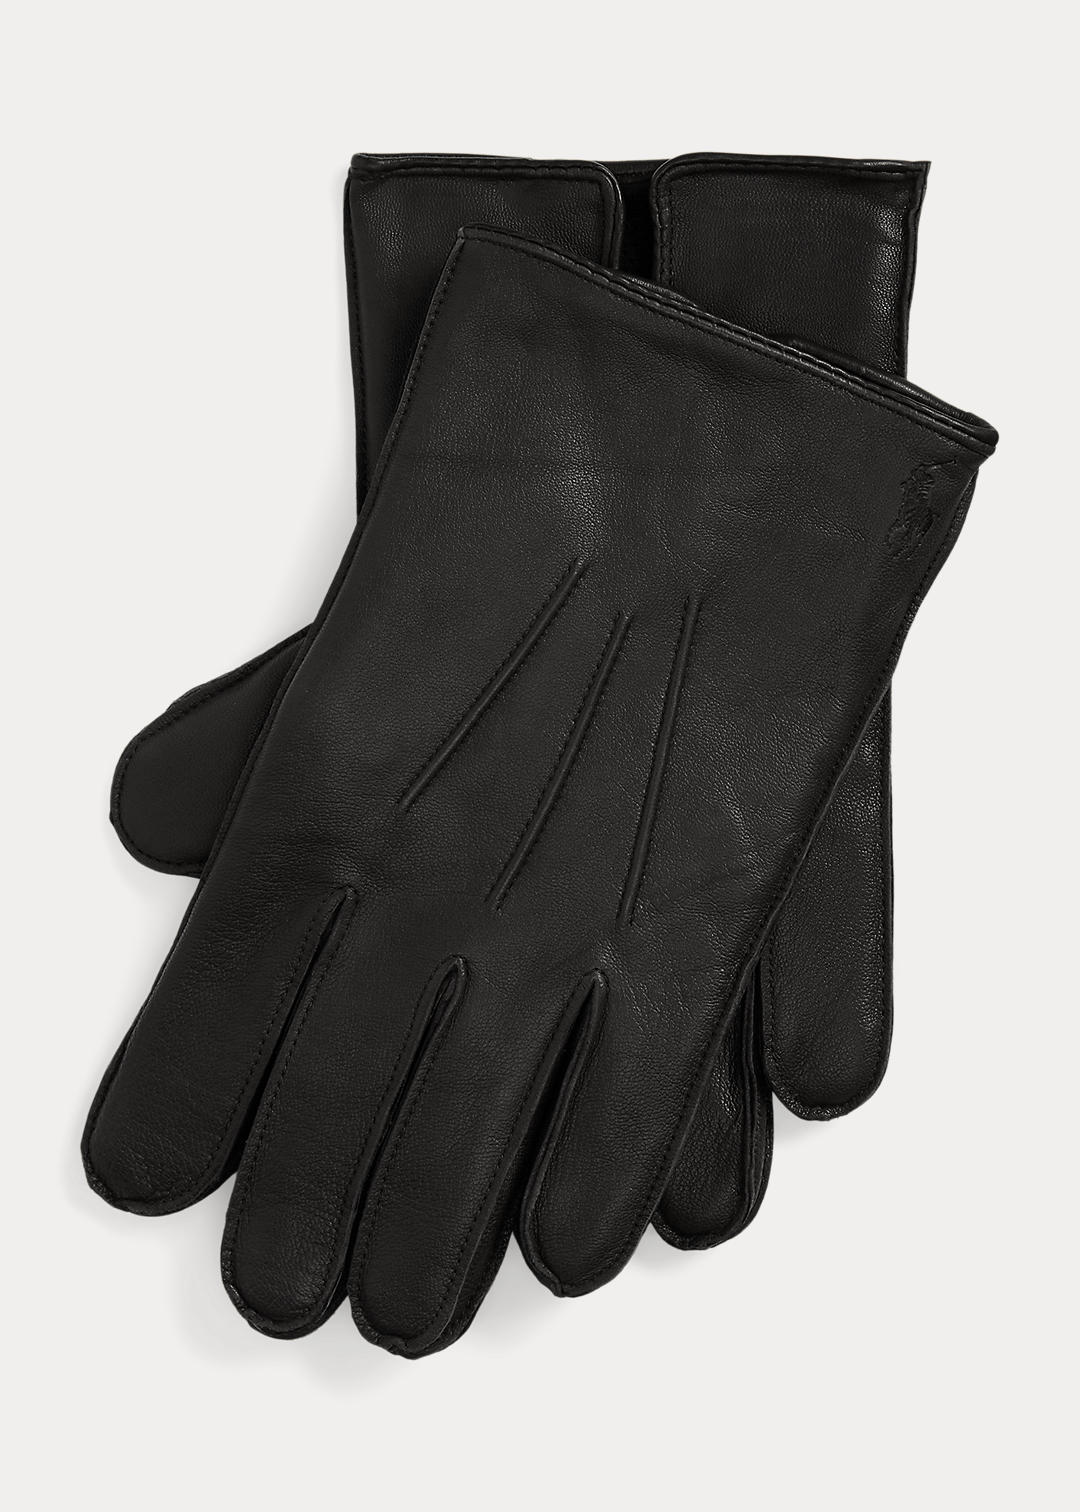 Insulated Sheepskin Touch Screen Gloves